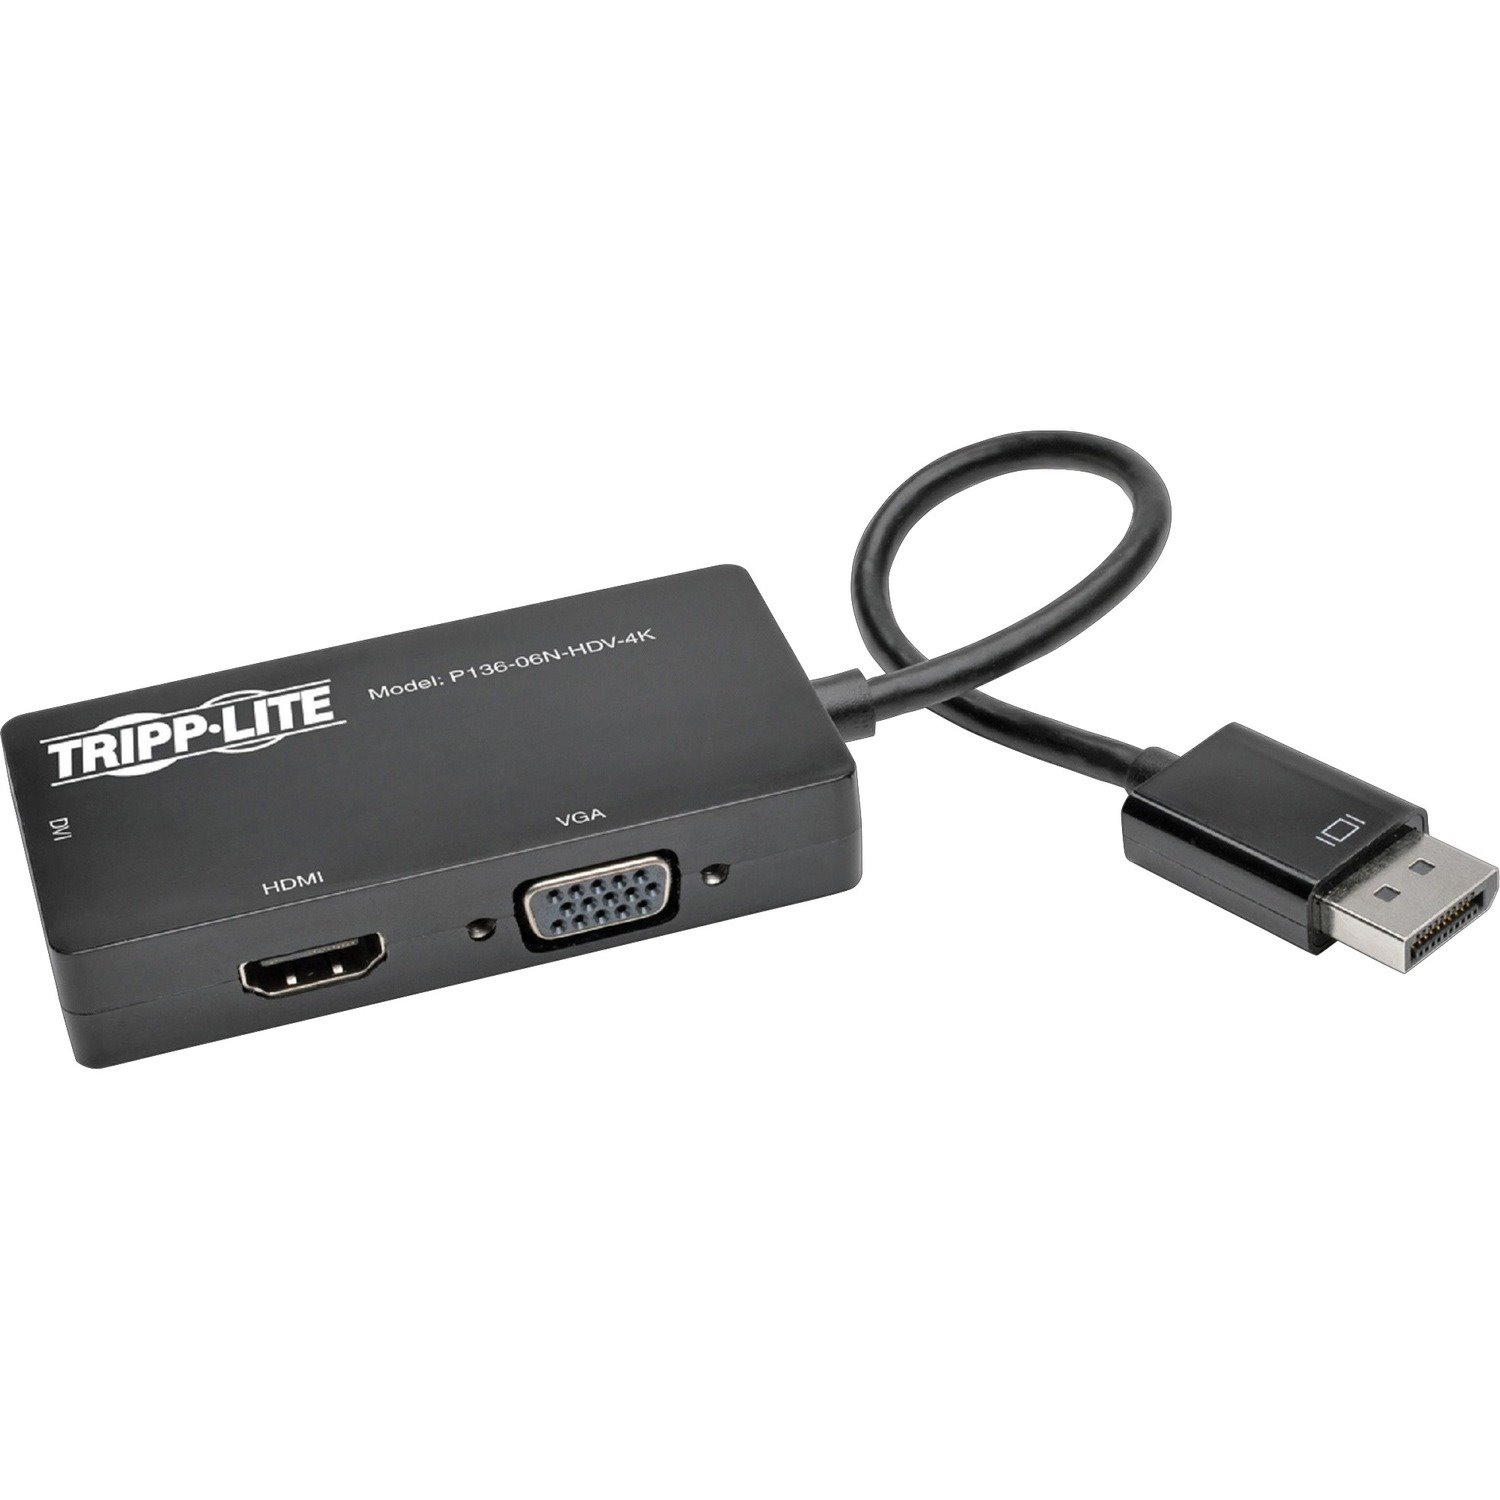 Tripp Lite by Eaton P136-06N-HDV-4K 15.24 cm DVI/DisplayPort/HDMI/VGA A/V Cable